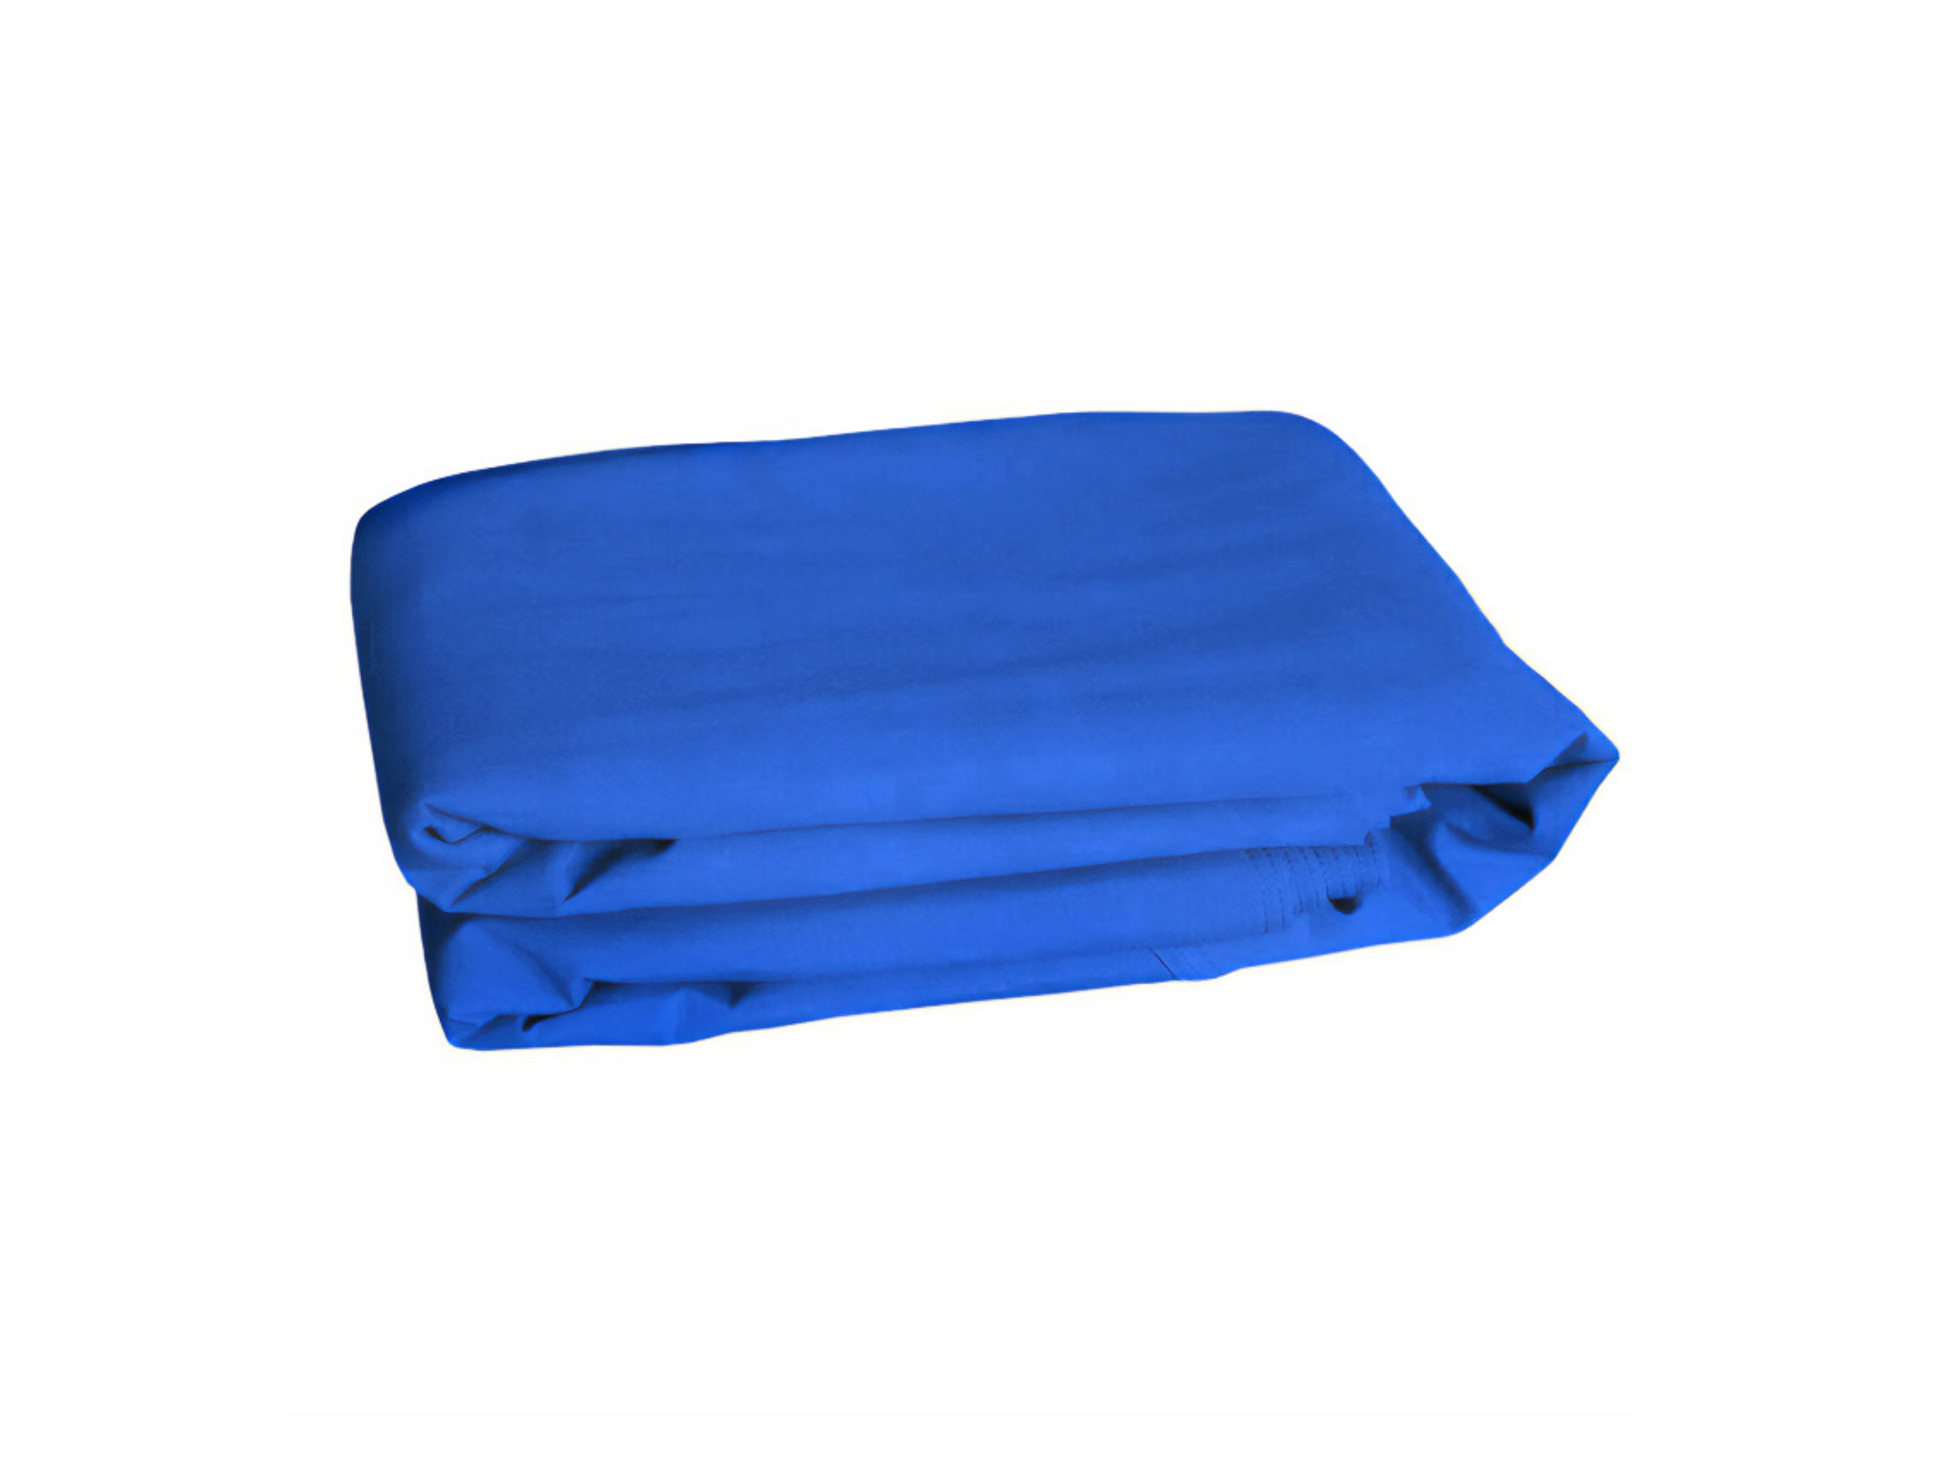 Replacement Canopy for Kingsbury Gazebo (GZ584), Sunbrella® Fabric in Mediterranean Blue